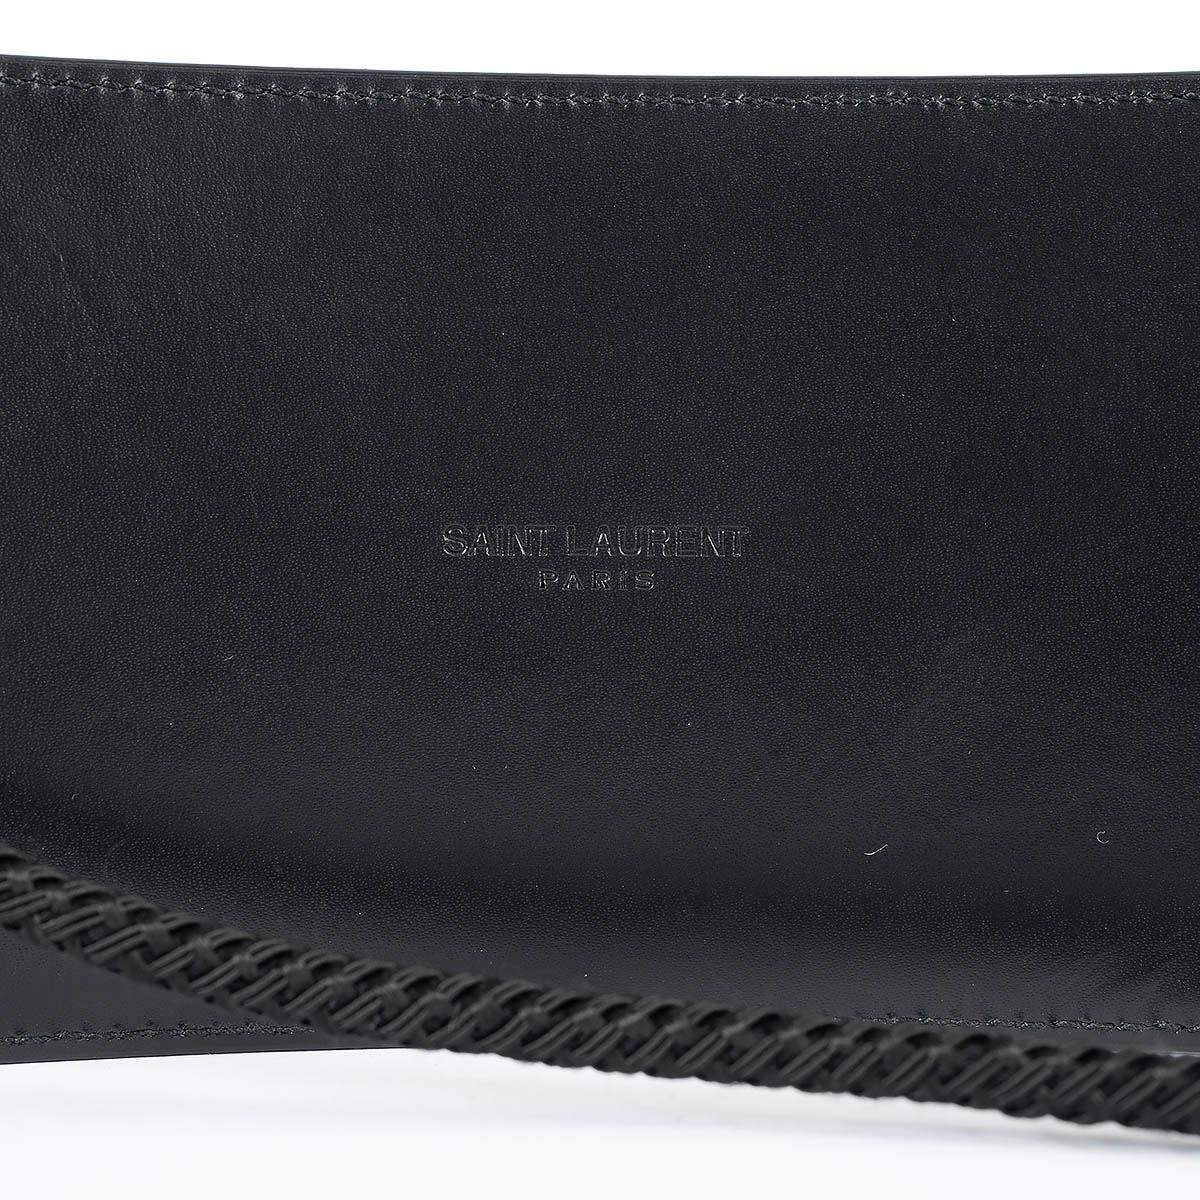 SAINT LAURENT black leather TASSELED WRAP WAIST Belt M For Sale 2